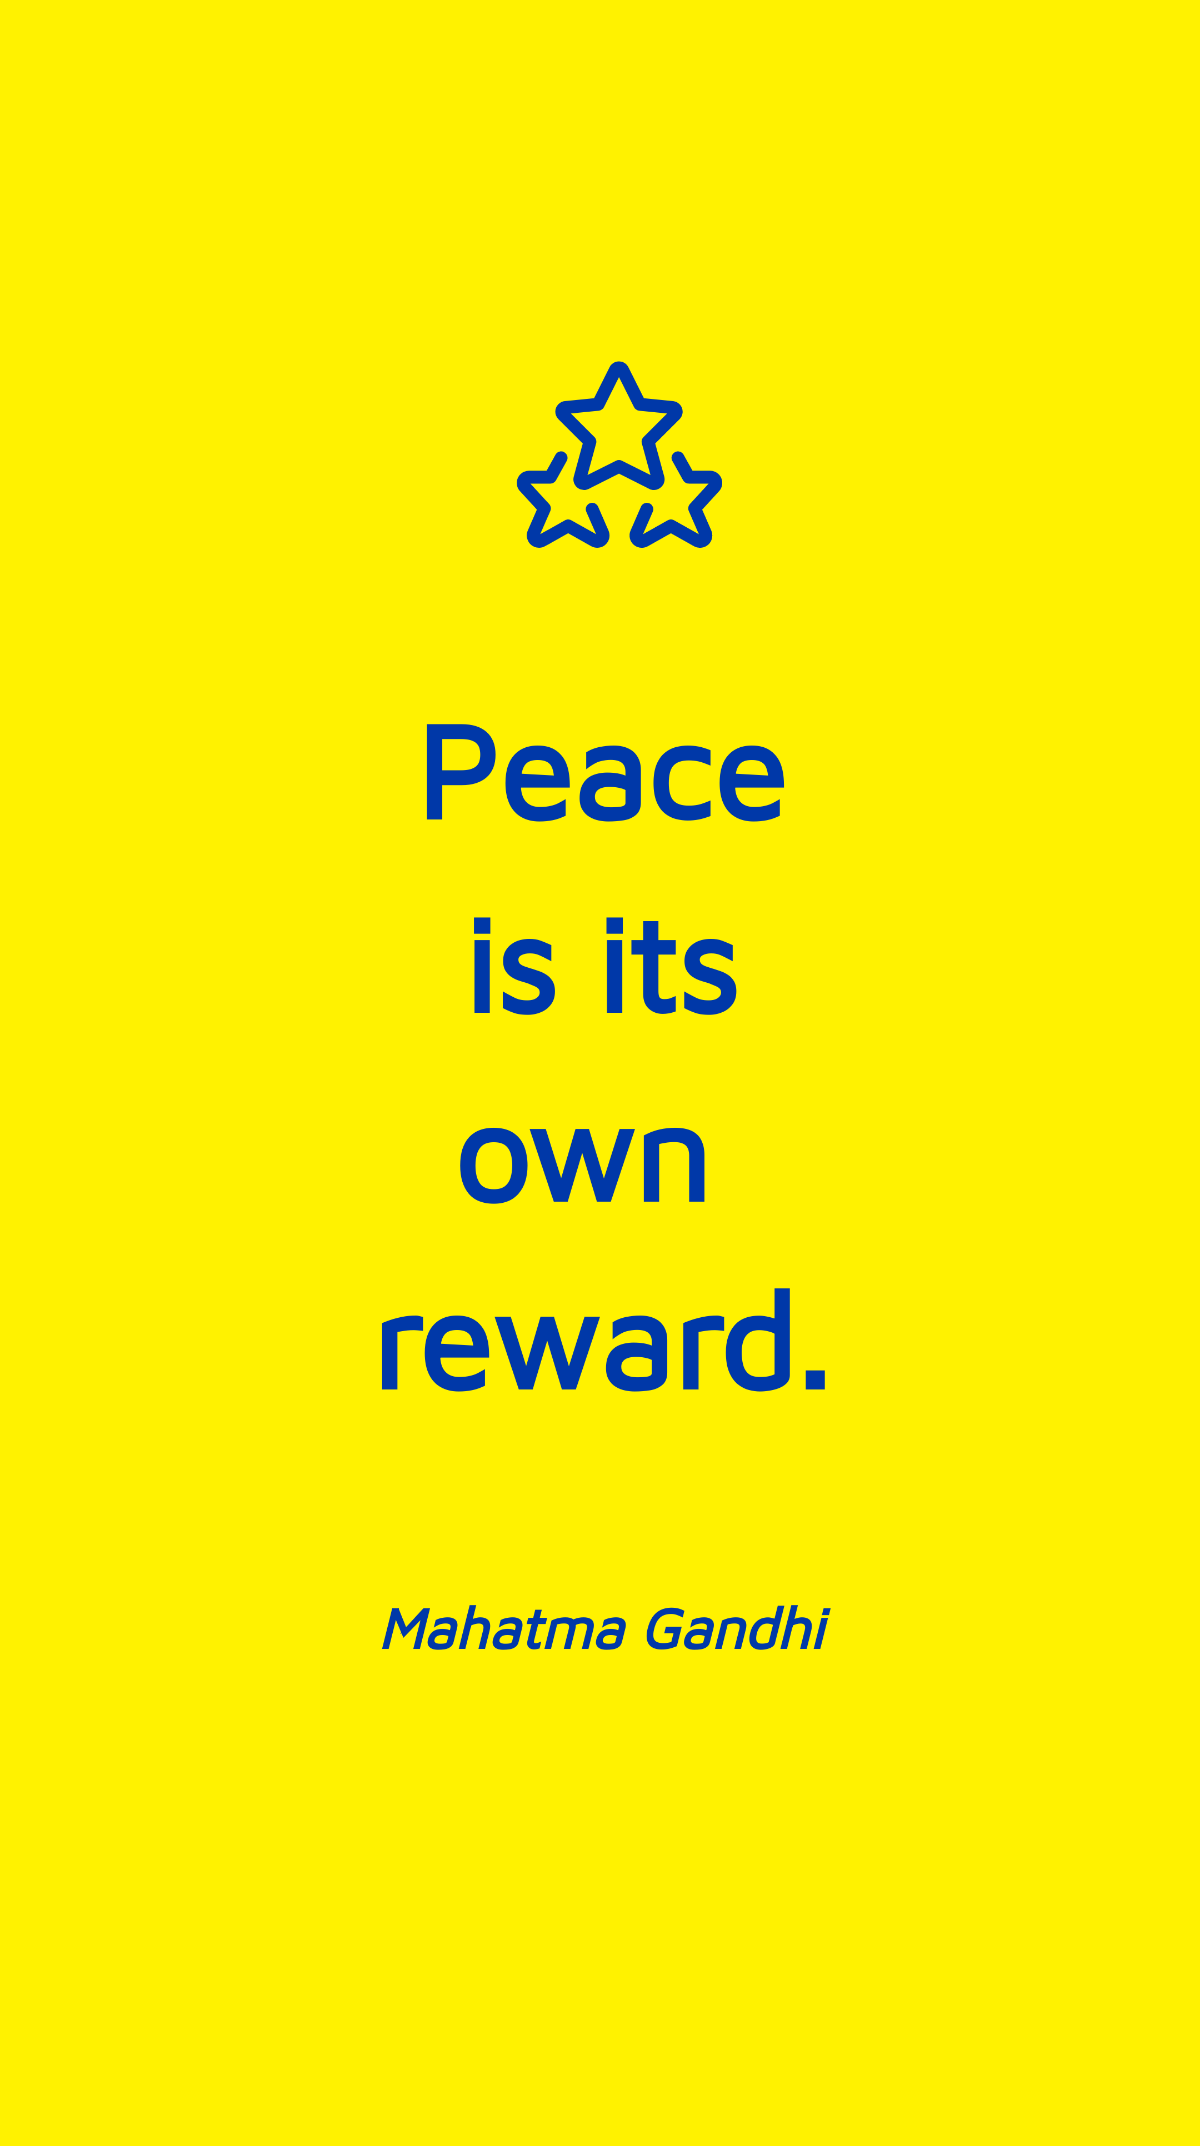 Free Mahatma Gandhi - Peace is its own reward. Template